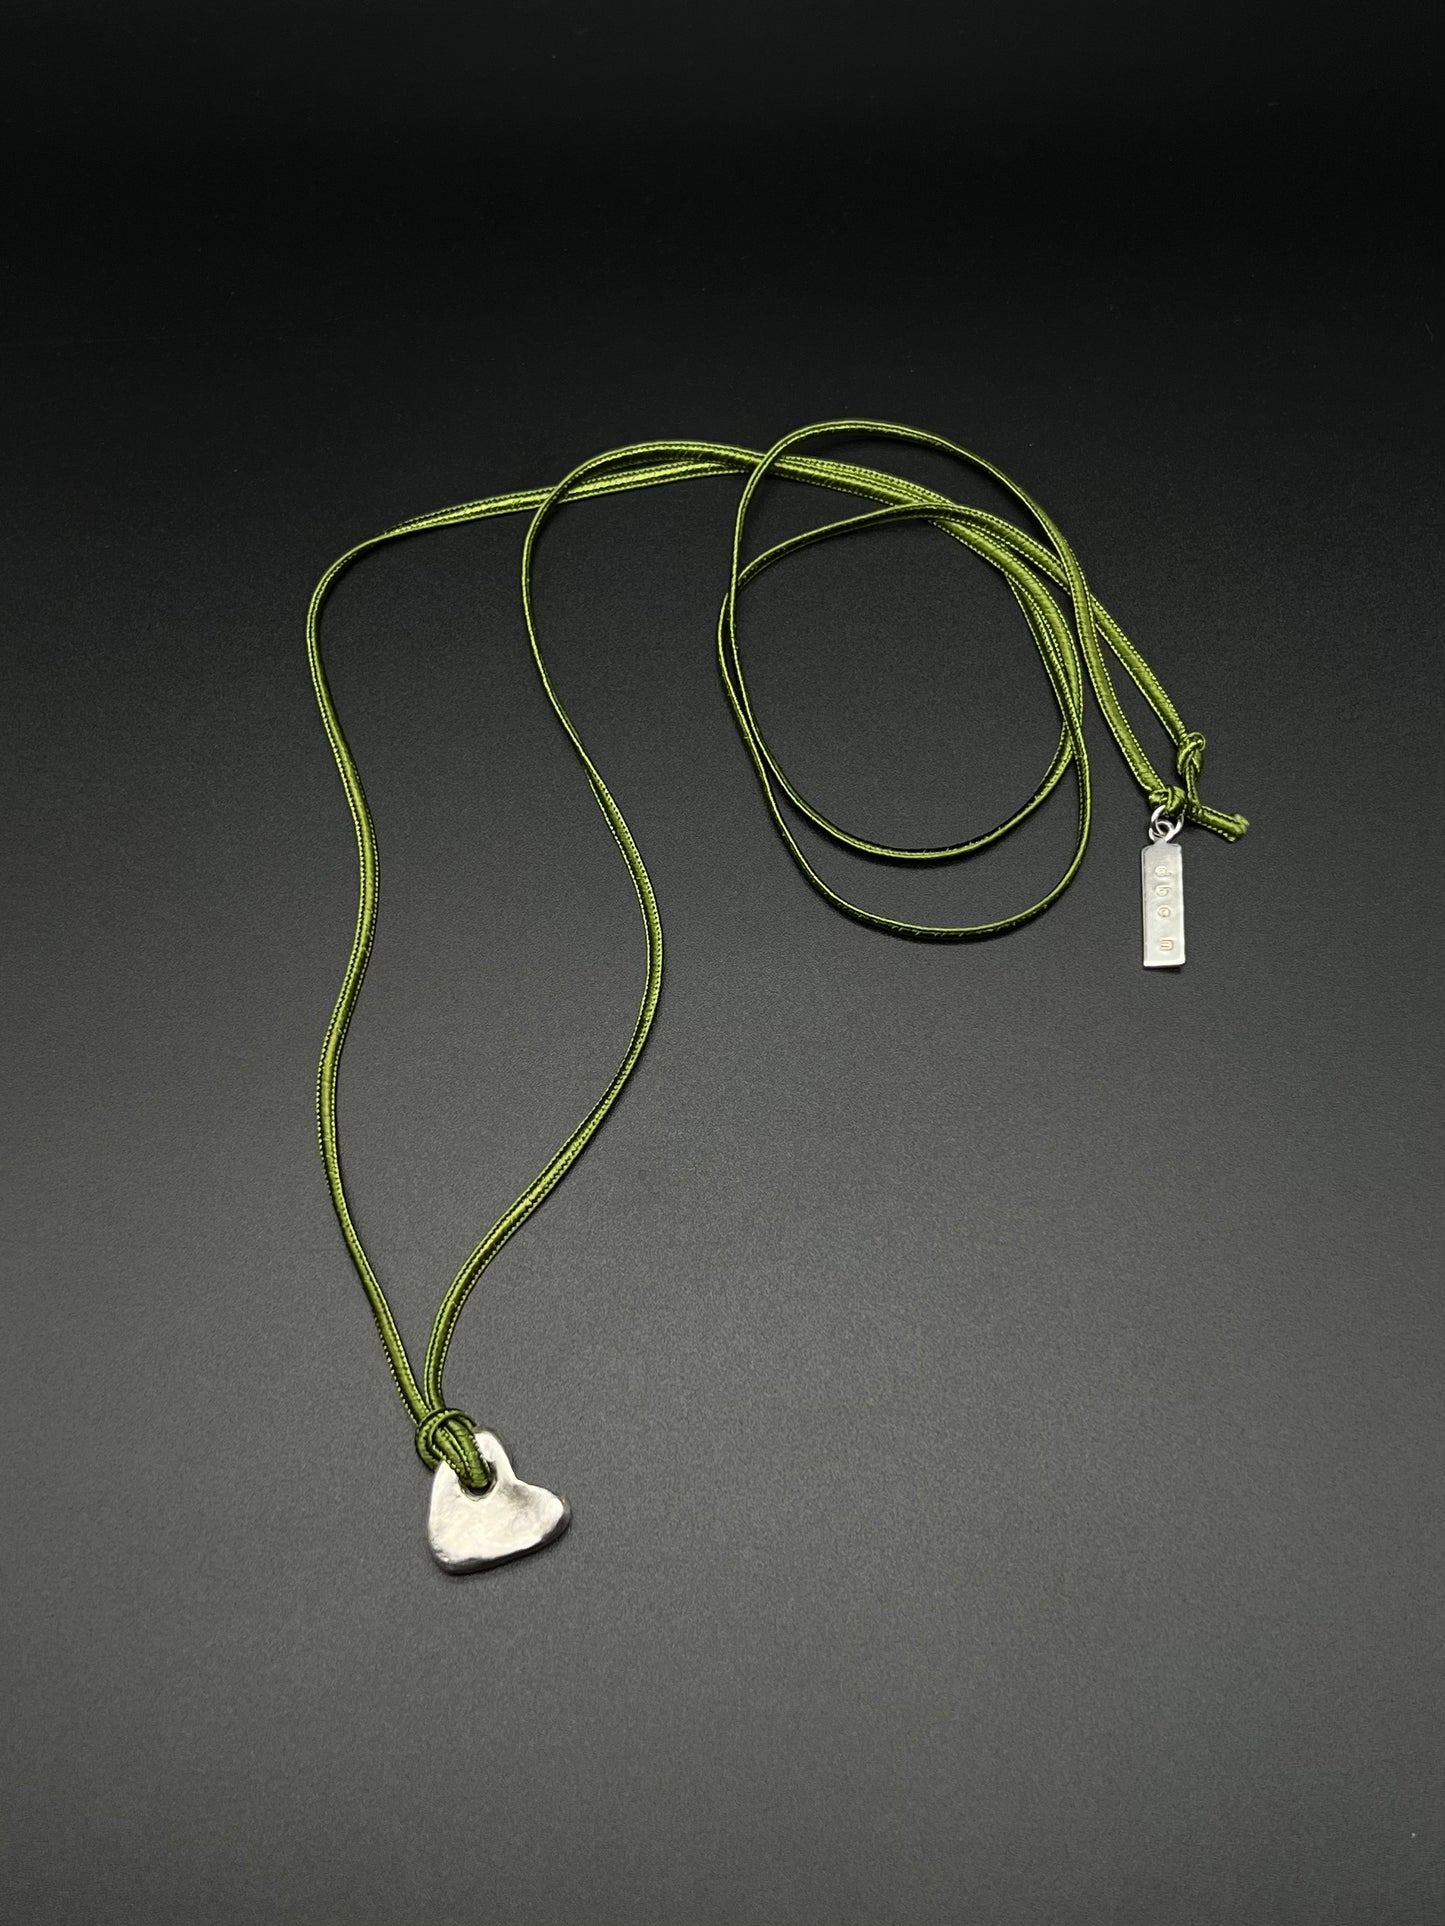 Heart cord necklace - silver original